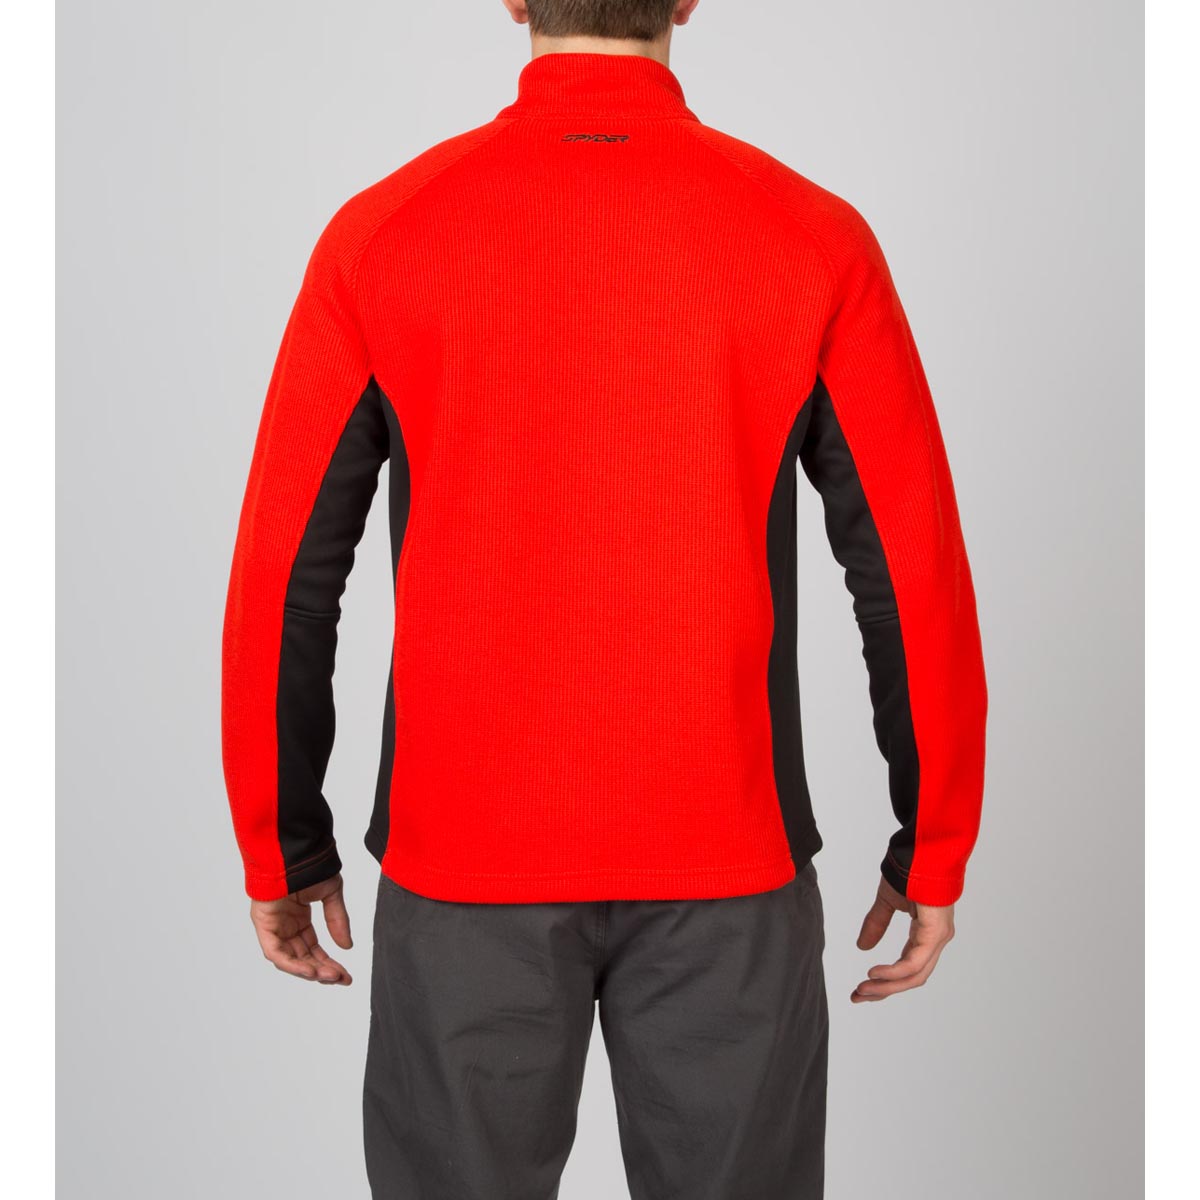 Spyder Men's Outbound Half Zip Mid Weight Core Sweater